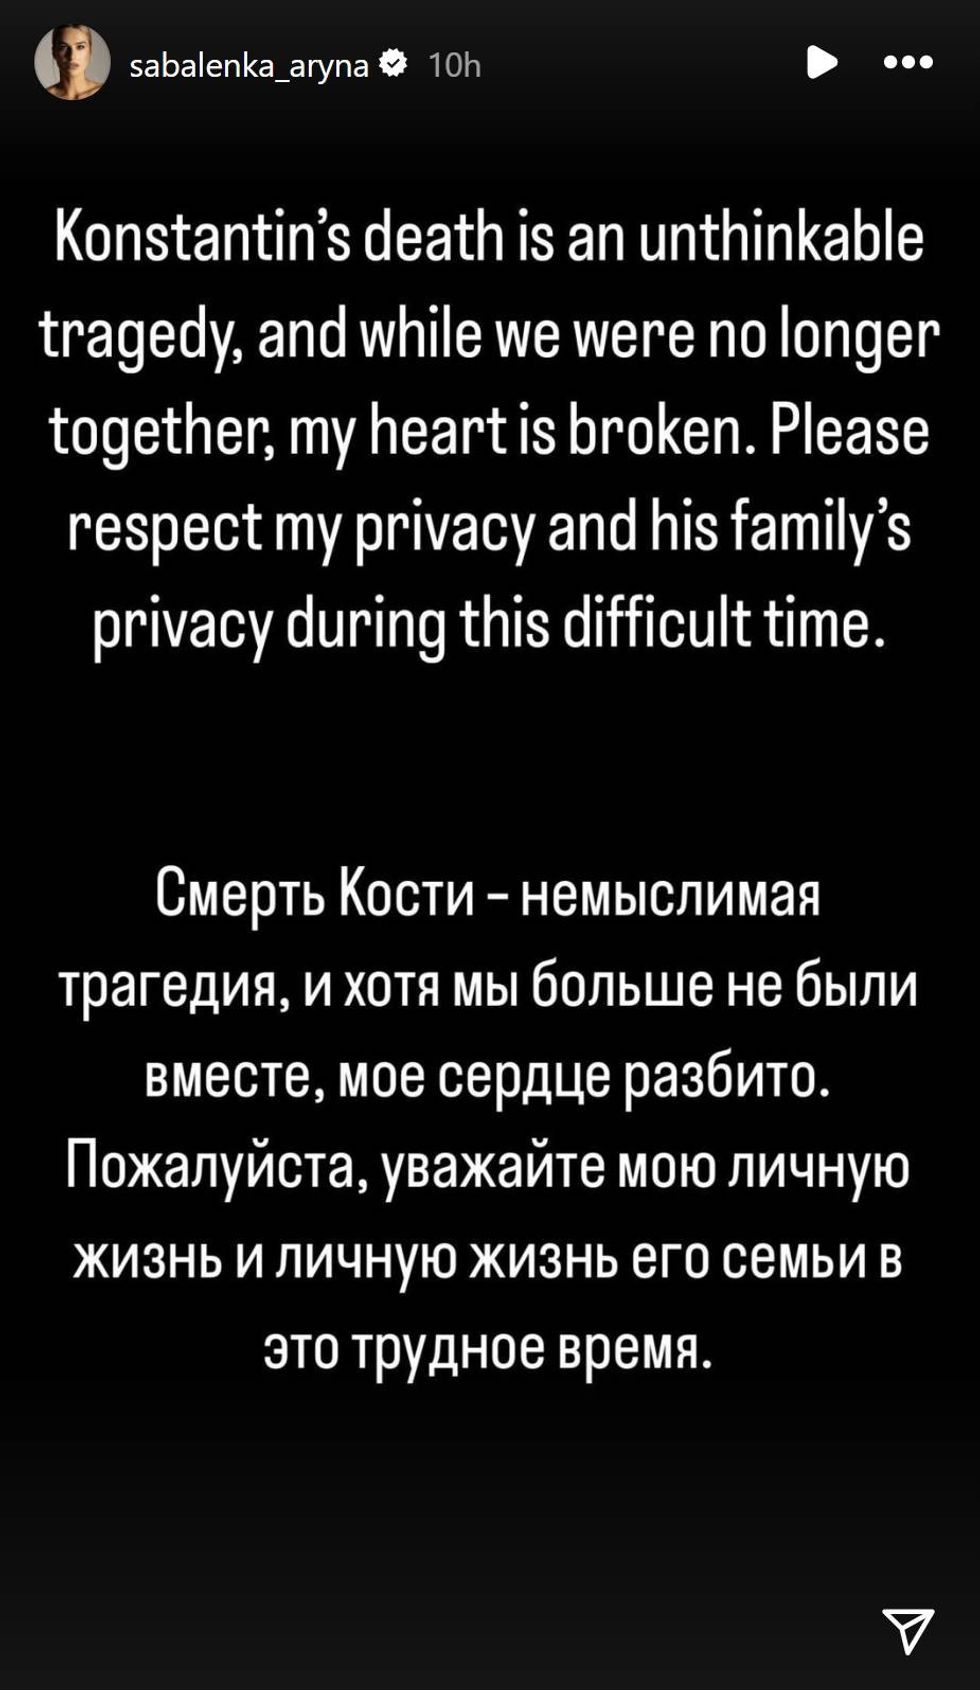 Aryna Sabalenka released a short statement on social media